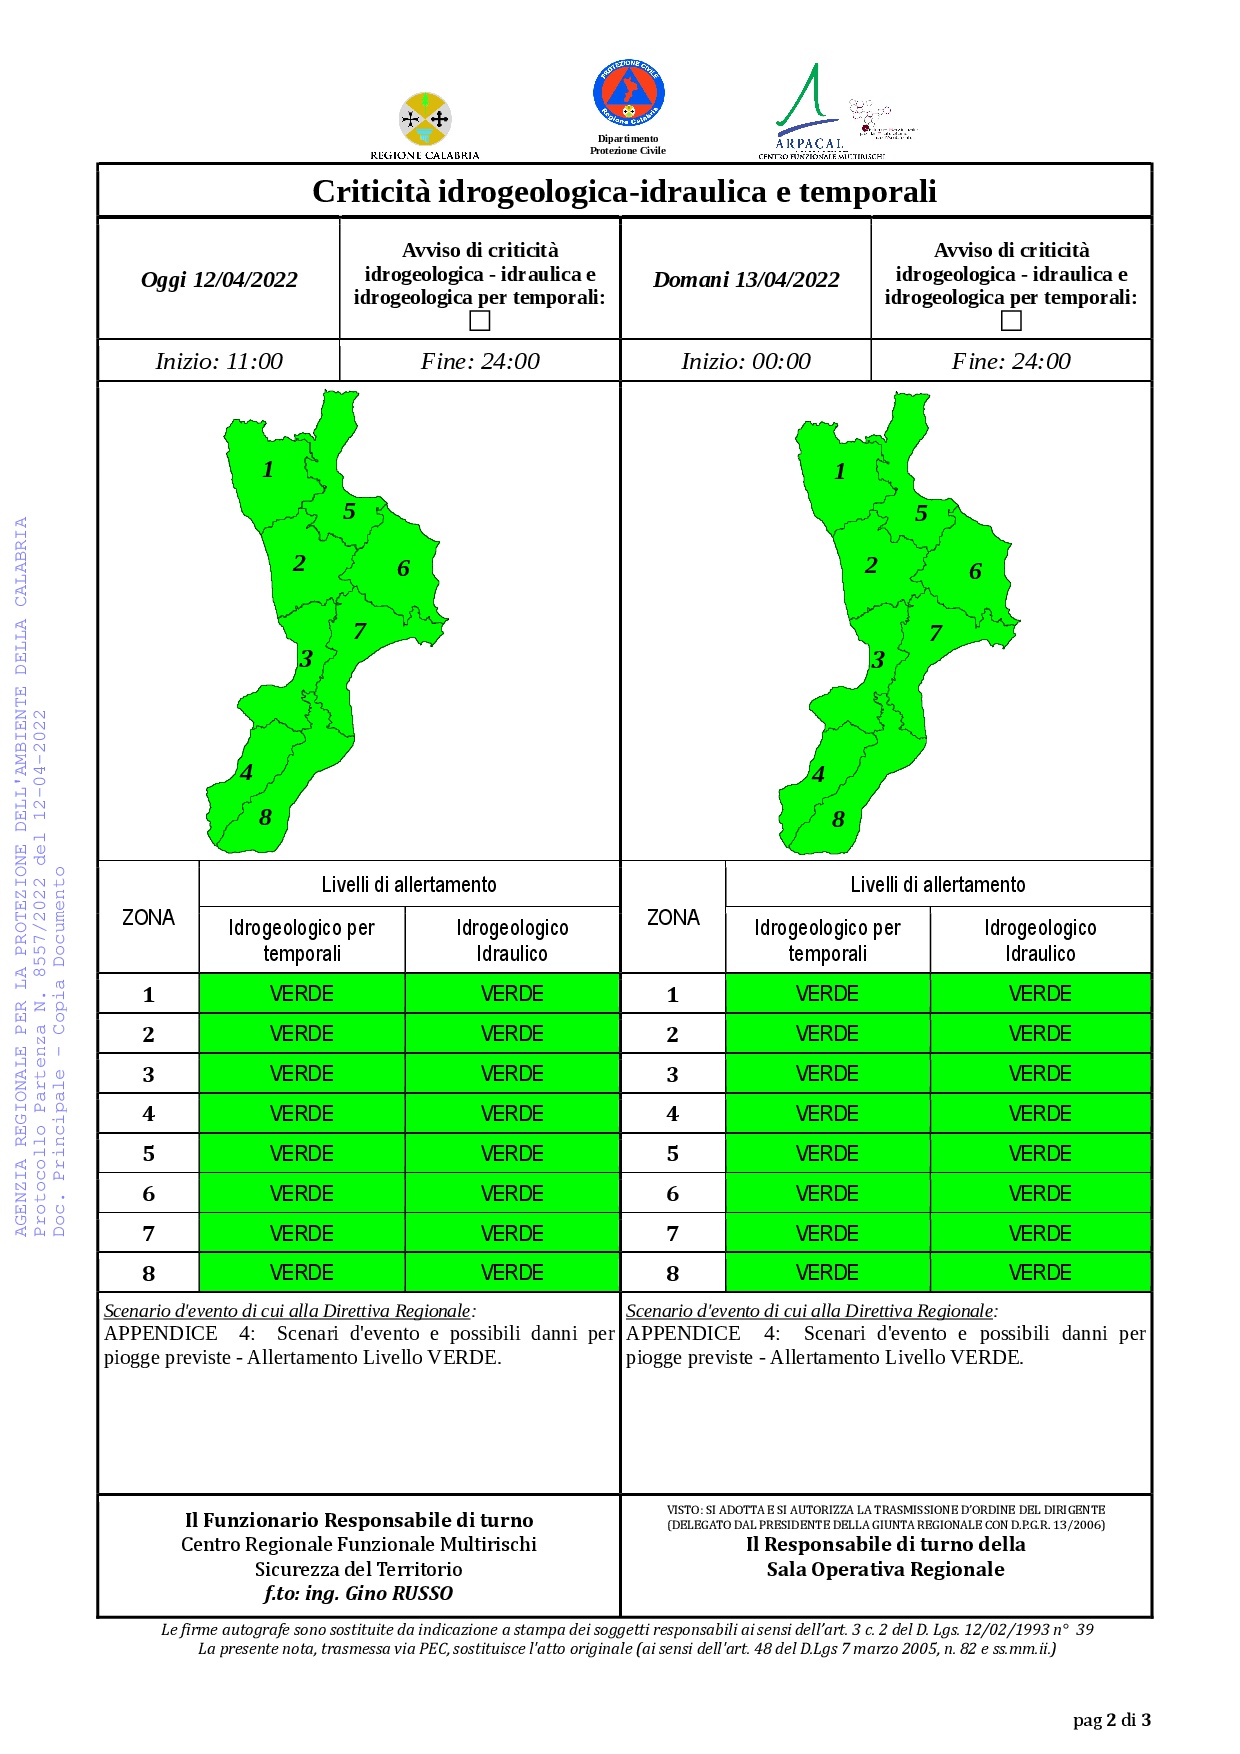 Criticità idrogeologica-idraulica e temporali in Calabria 12-04-2022